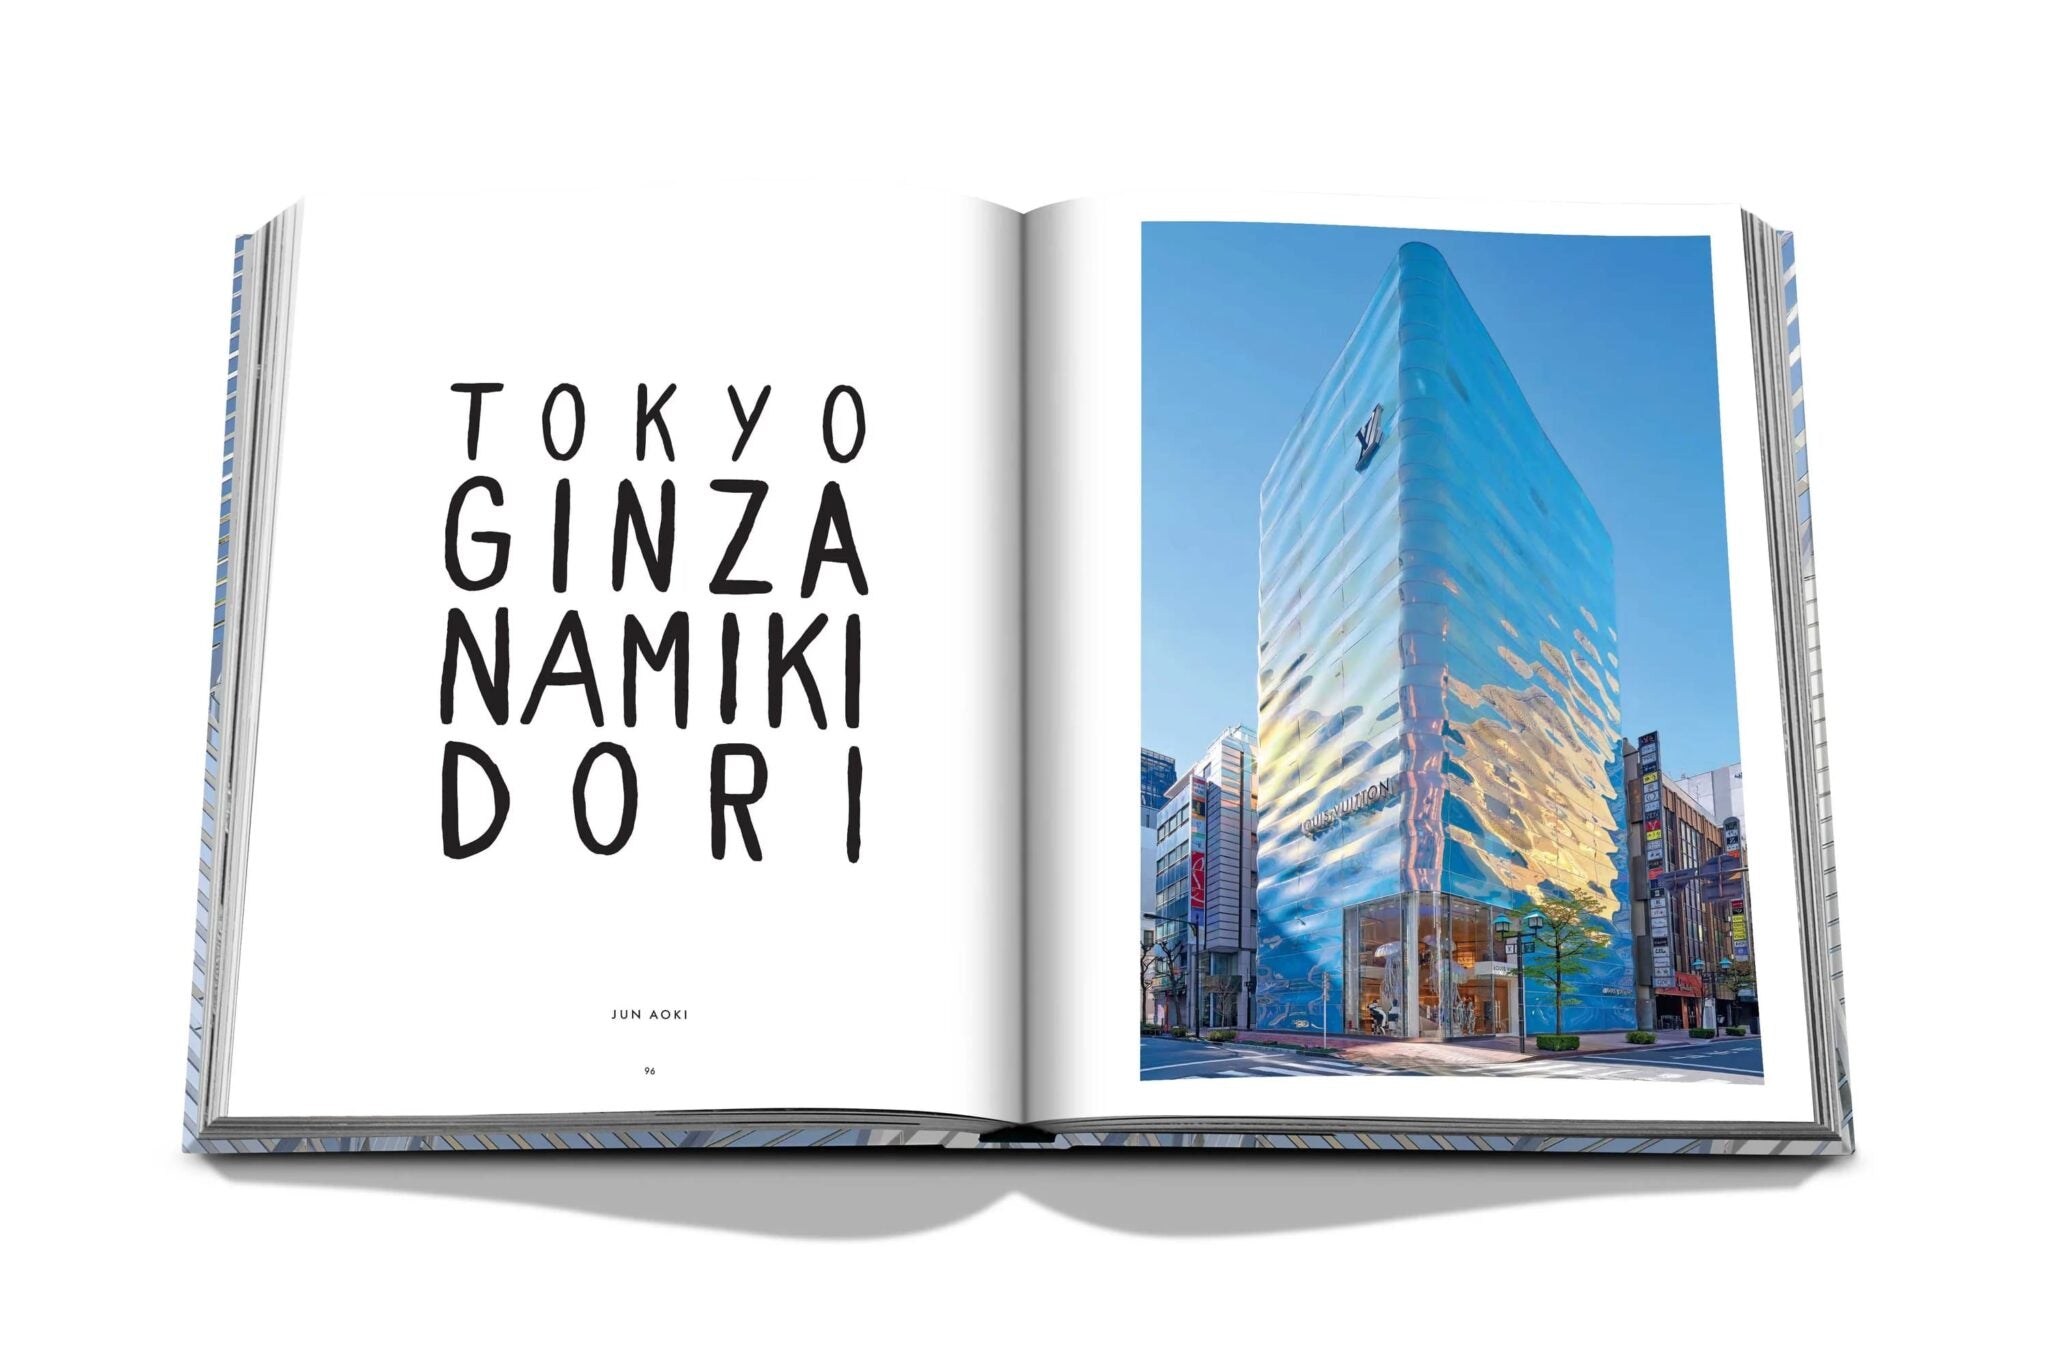 Assouline Louis Vuitton Skin: Architecture Of Luxury (Tokyo Edition)